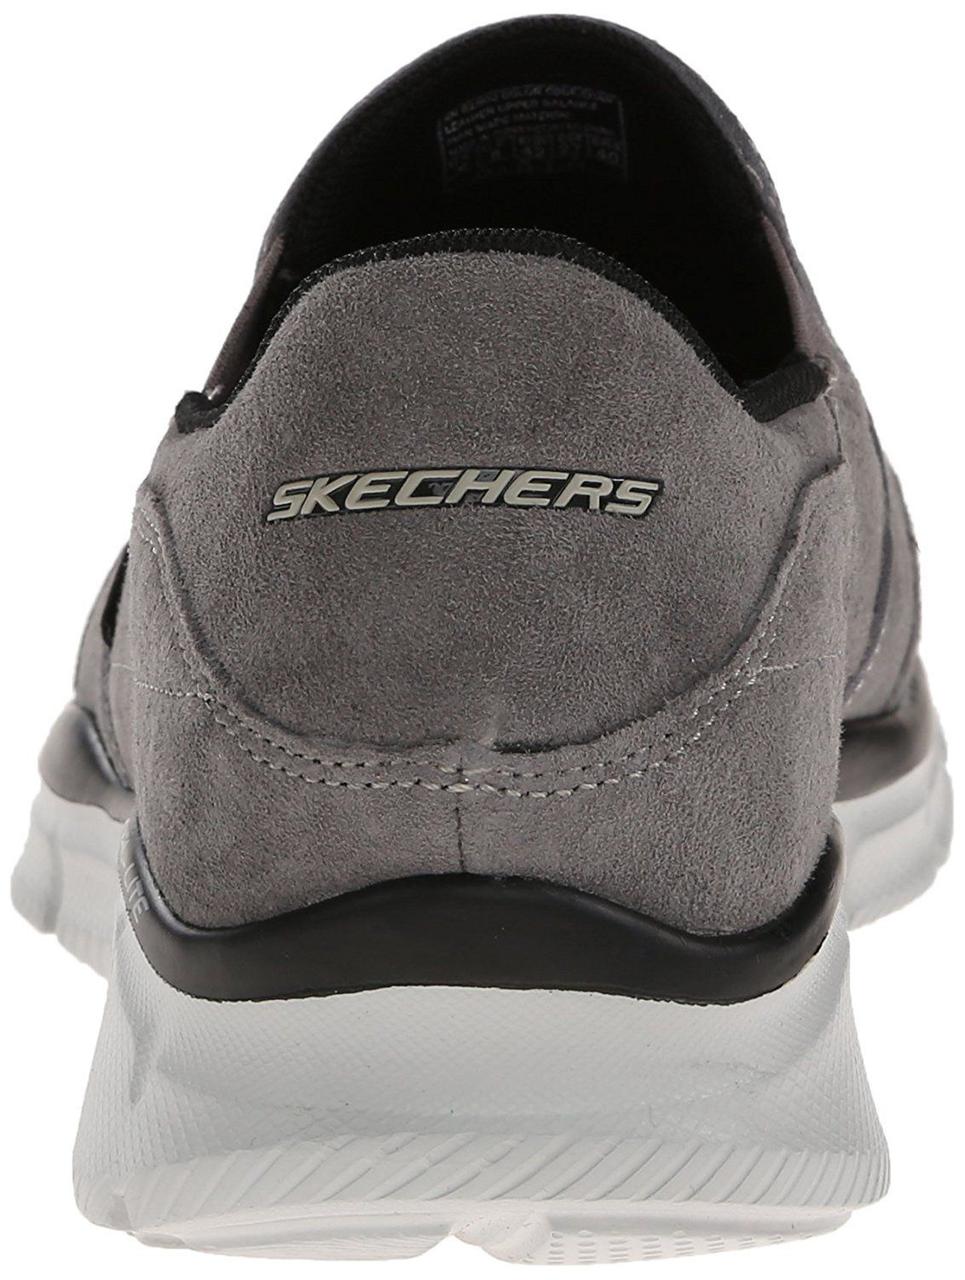 Мужская обувь Skechers Sport Men's Equalizer Mind Game Slip-On Loafer  большой размер, цена 1600 грн - Prom.ua (ID#649361966)